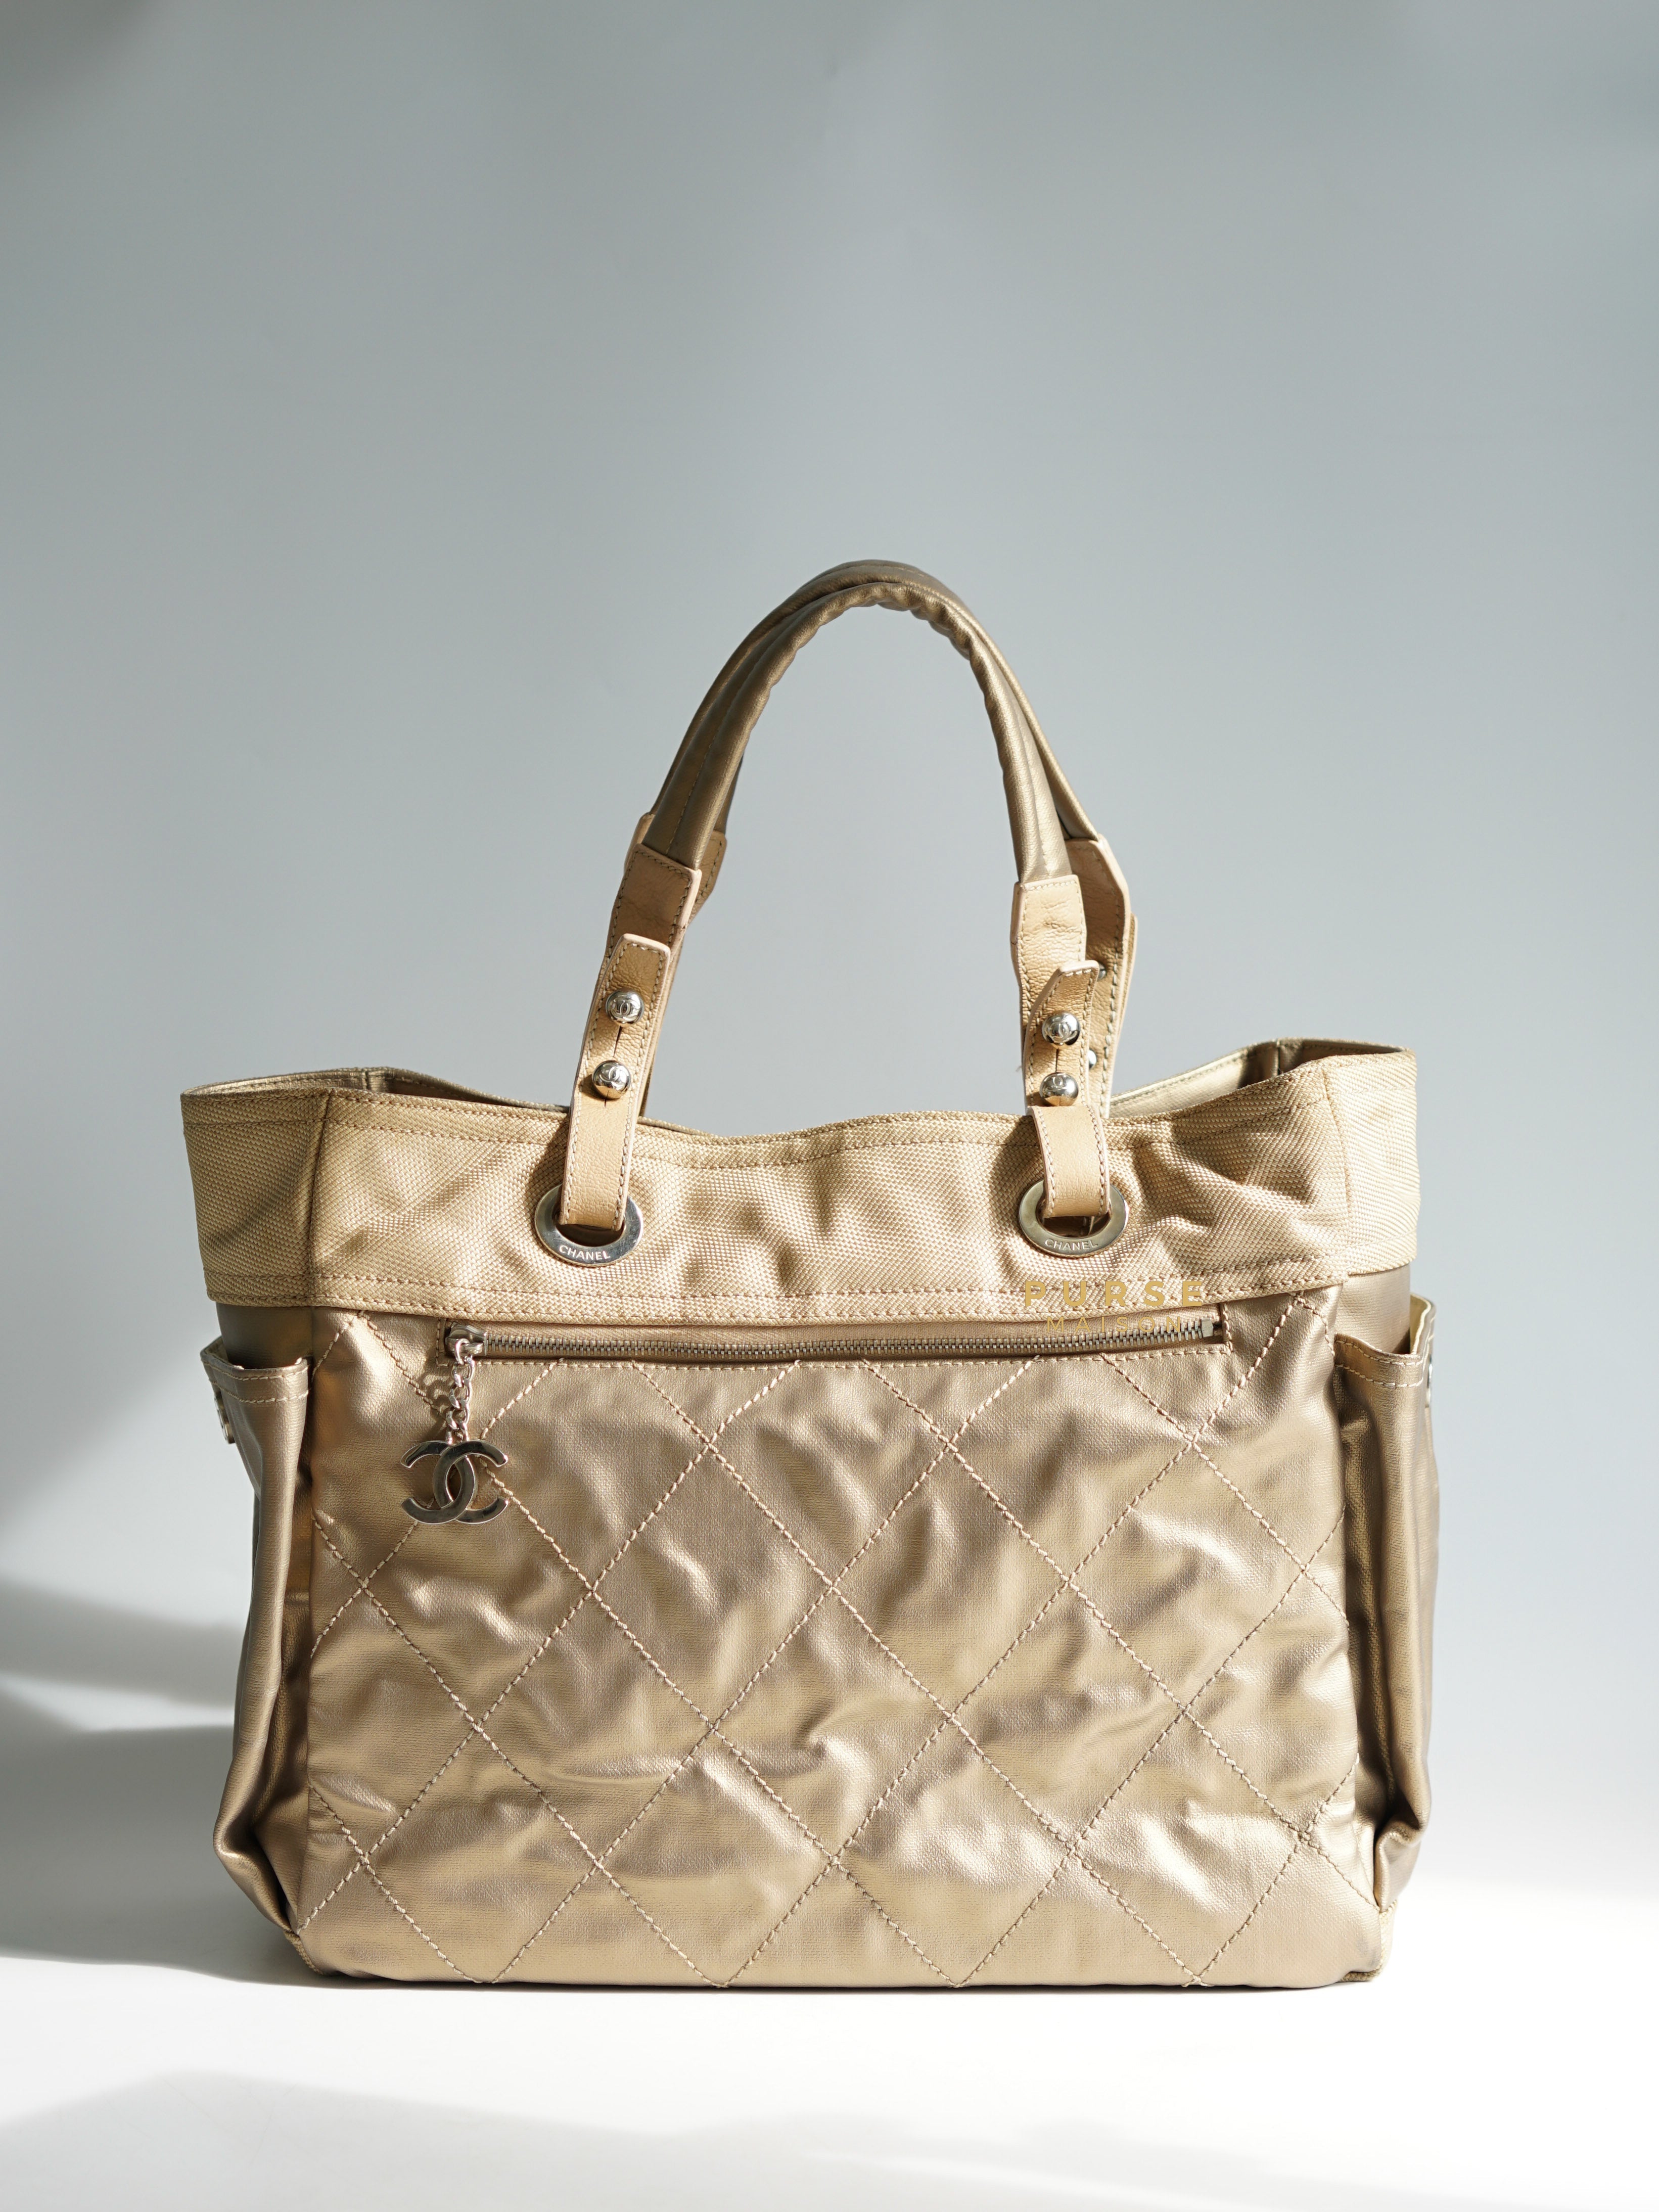 Chanel Biarritz Large Tote Bag (Series 11) | Purse Maison Luxury Bags Shop